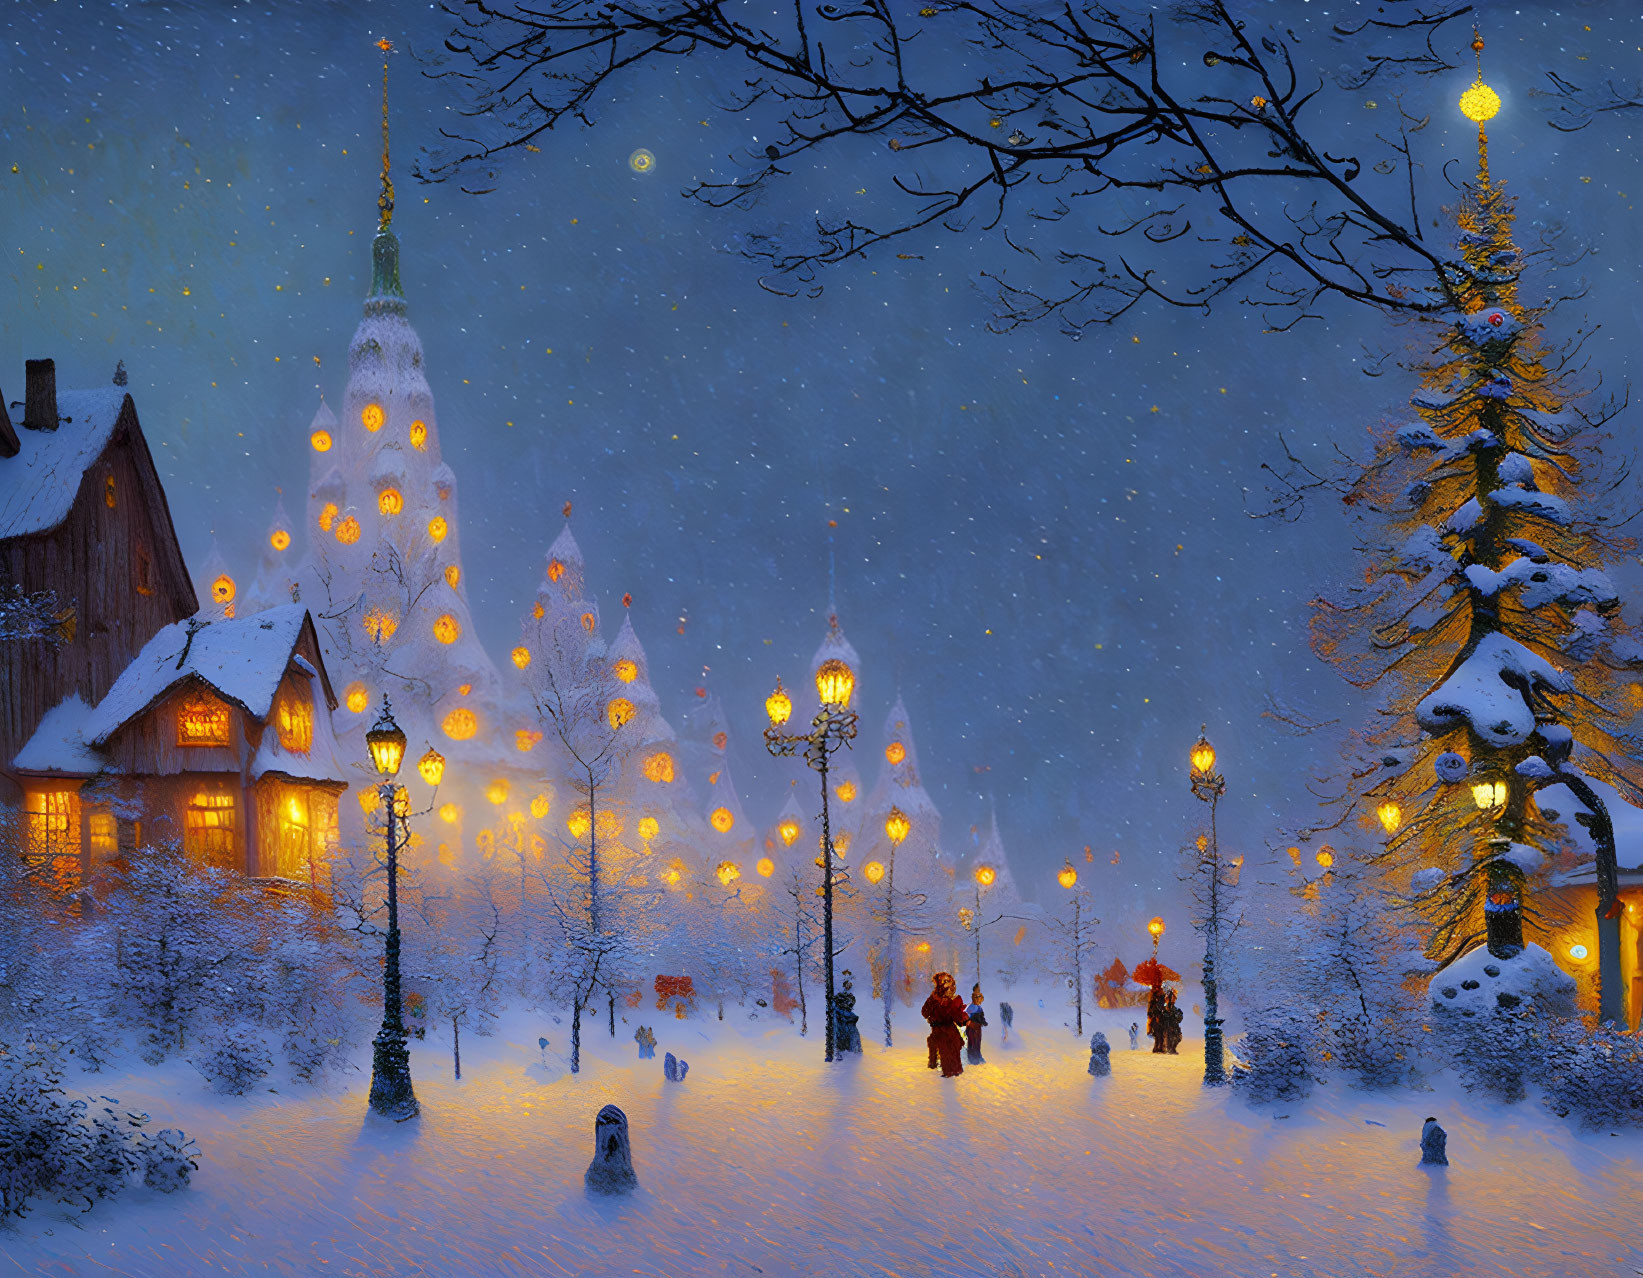 Snowy Evening Scene: People Walking, Warm Street Lamp Light, Tree with Lights, Towering Sp